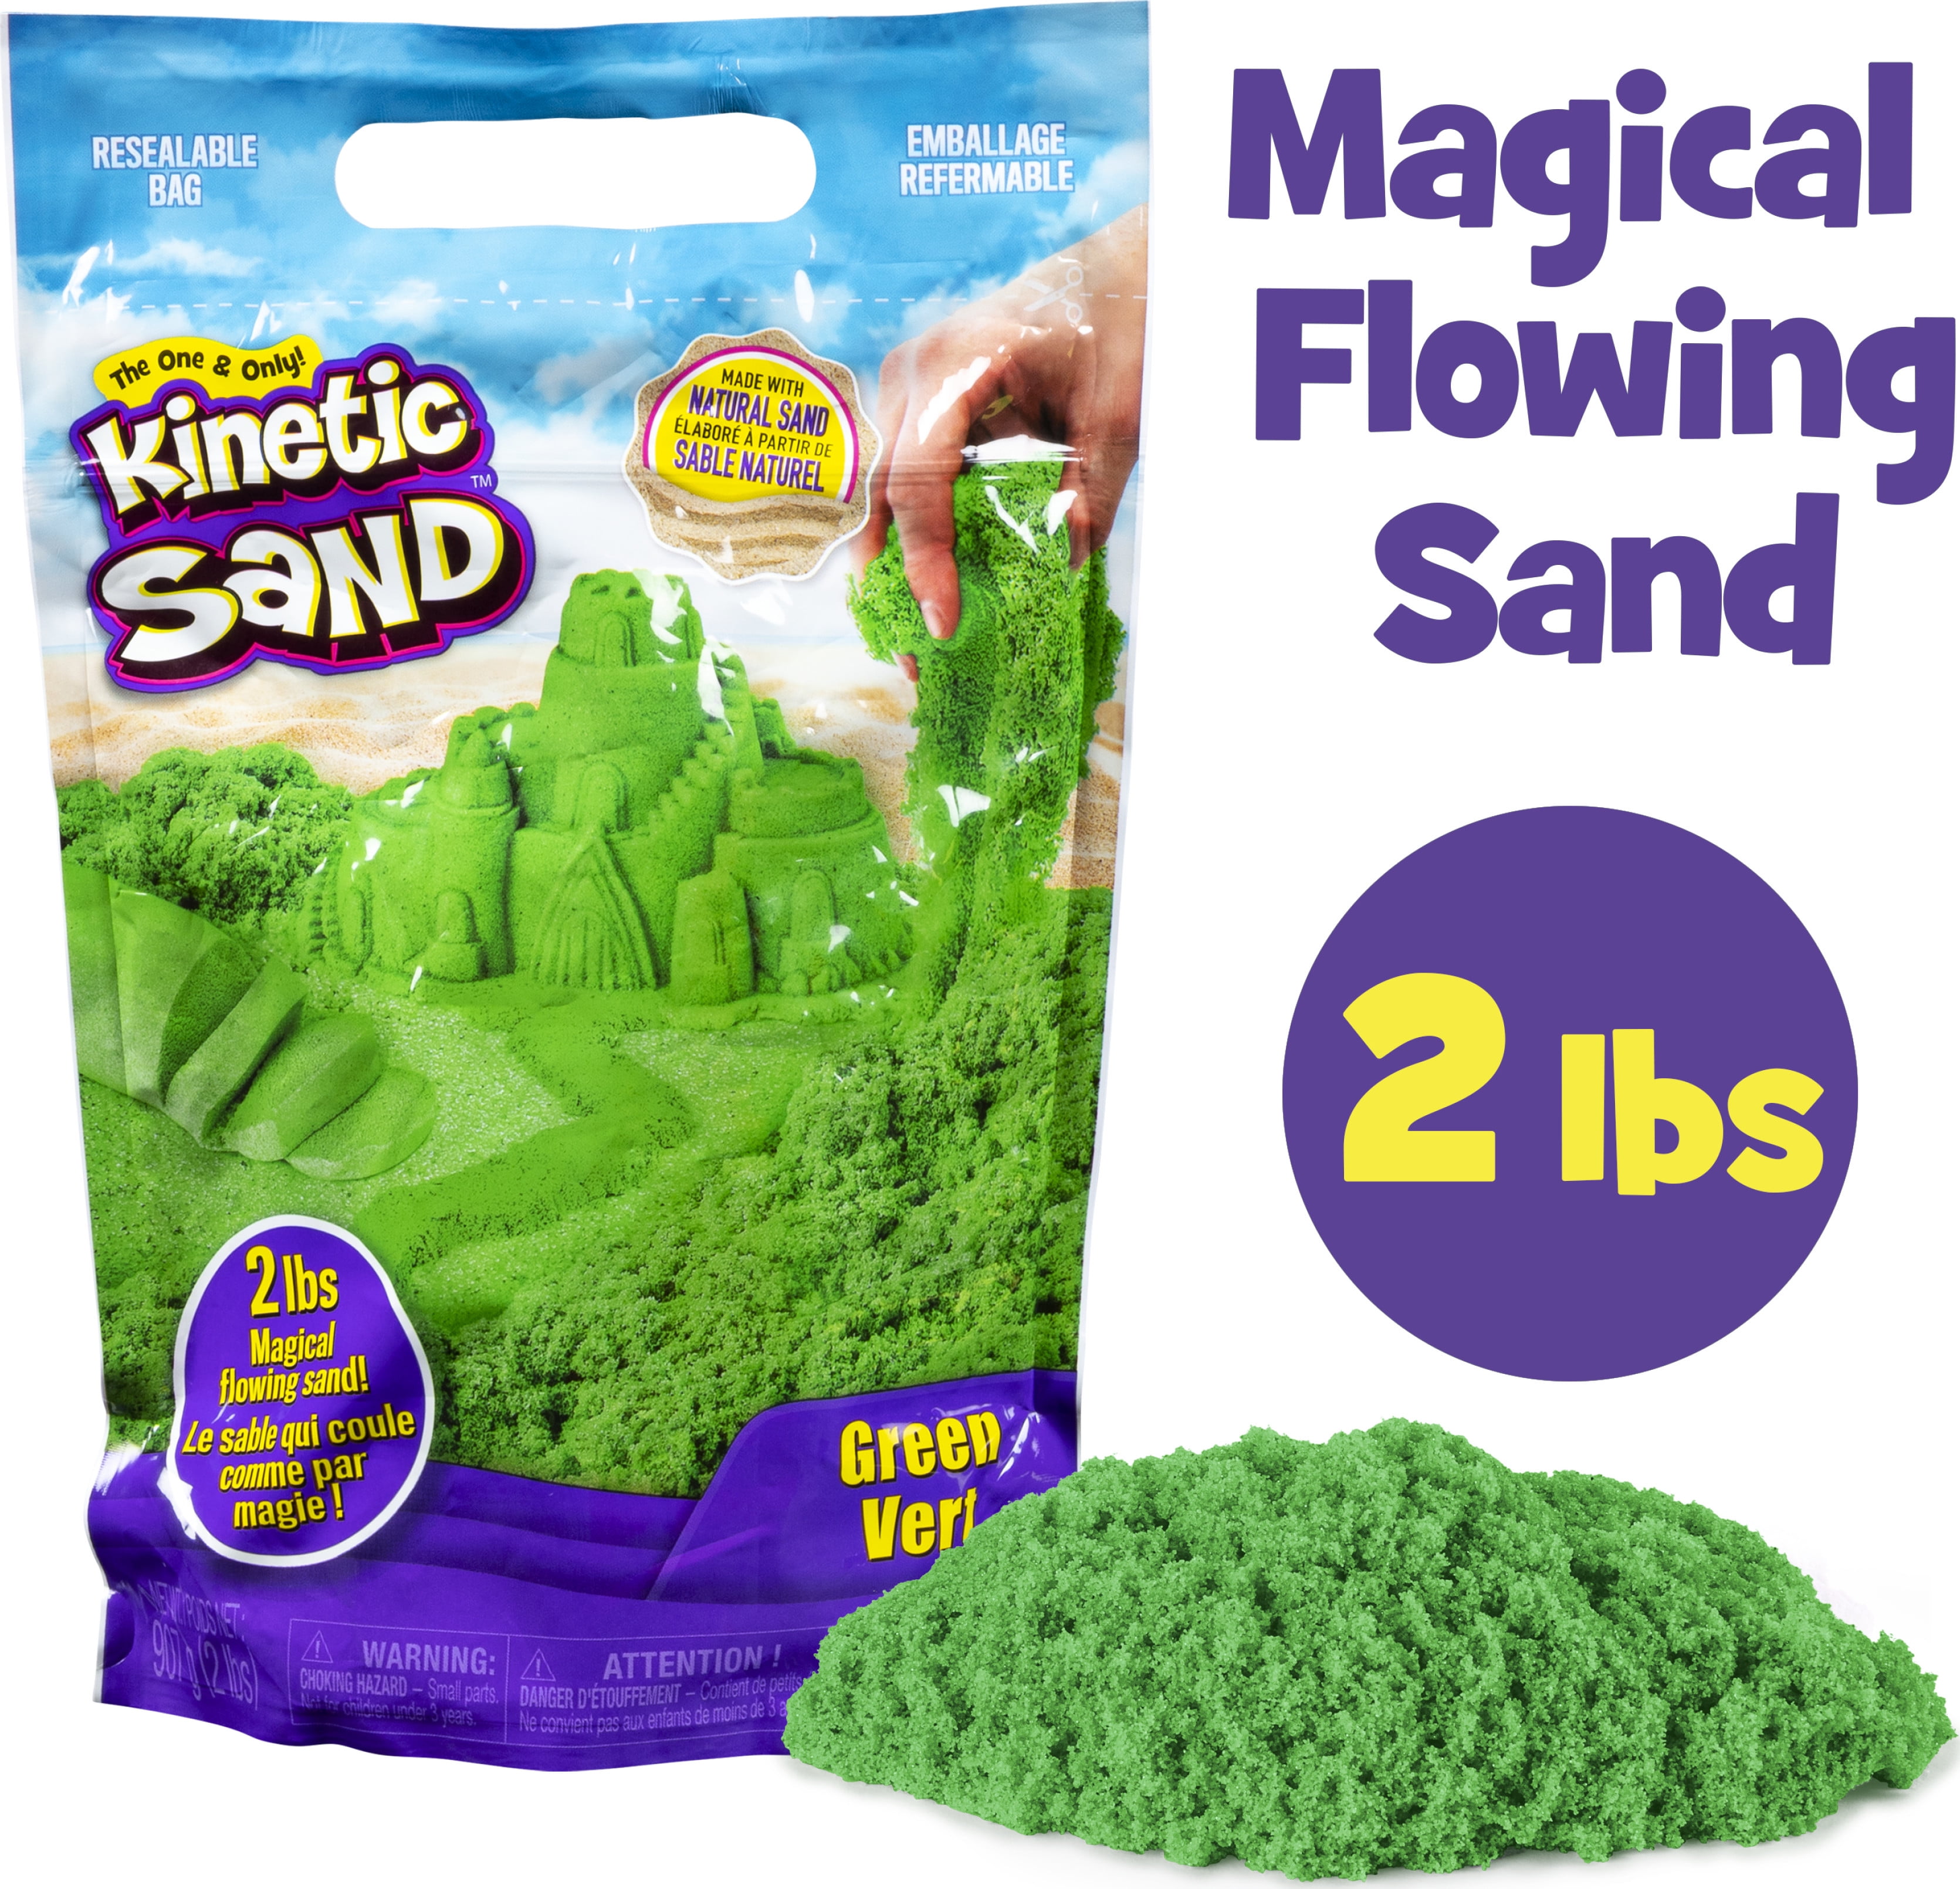 Kinetic Sand The Original Moldable Sensory Play Sand Blue 2 Pounds Natural Sand 